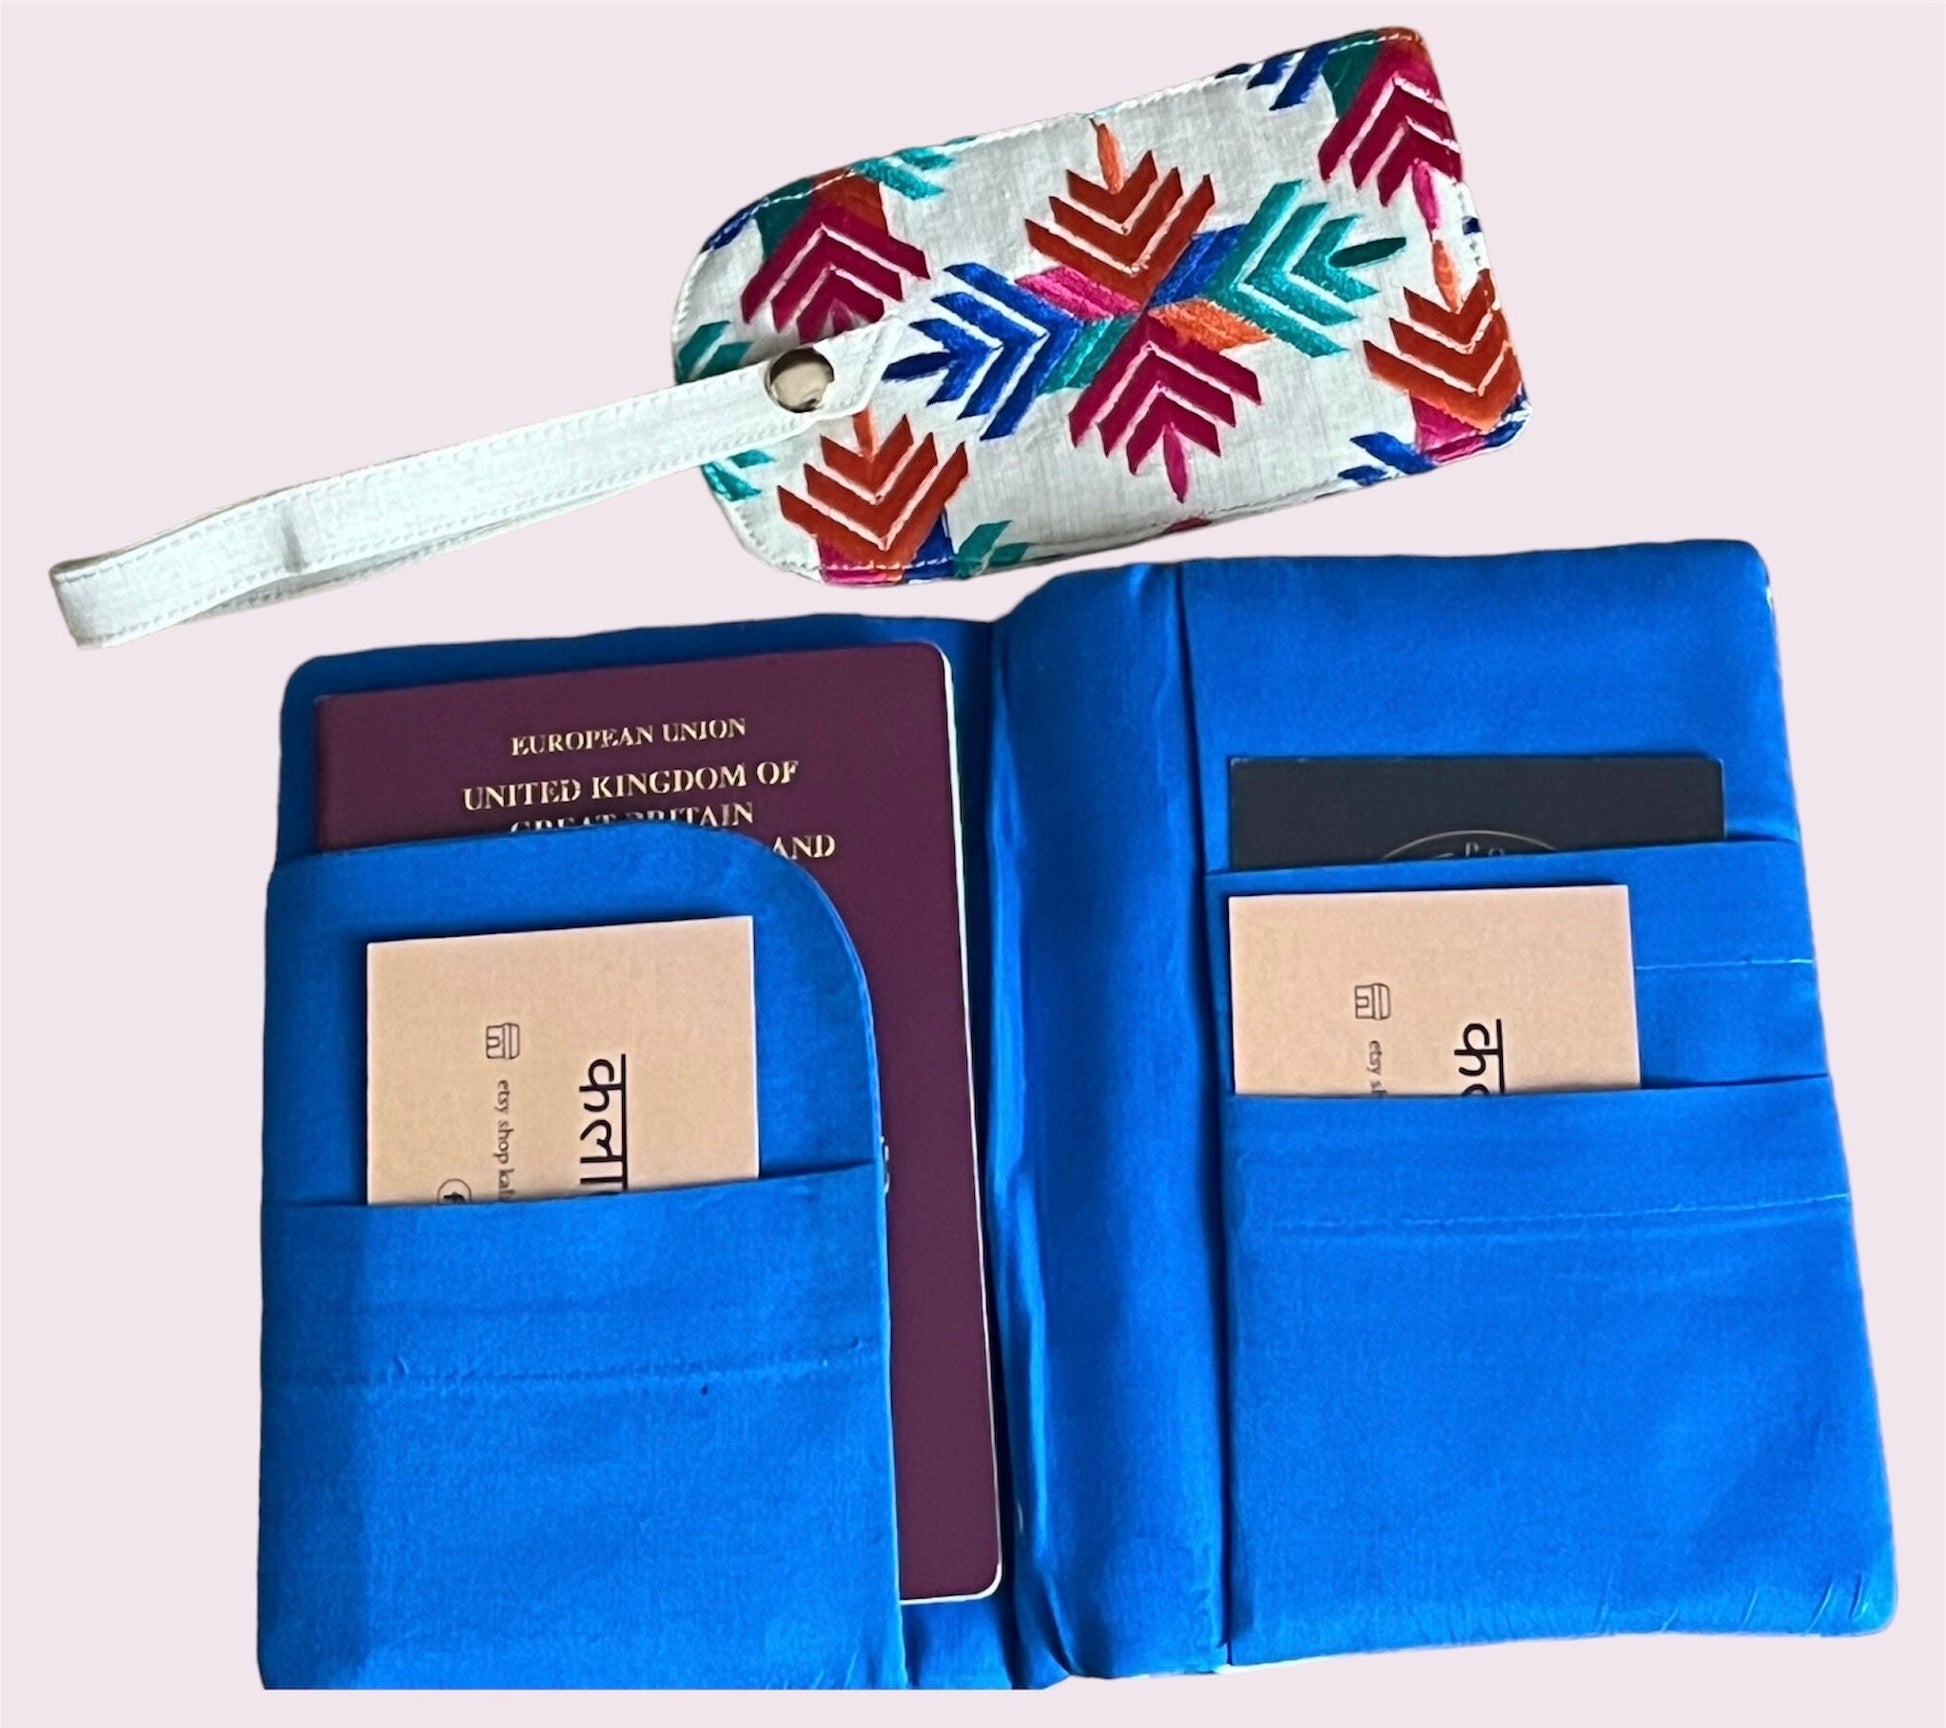 Handmade fabric passport holder with matching luggage tag